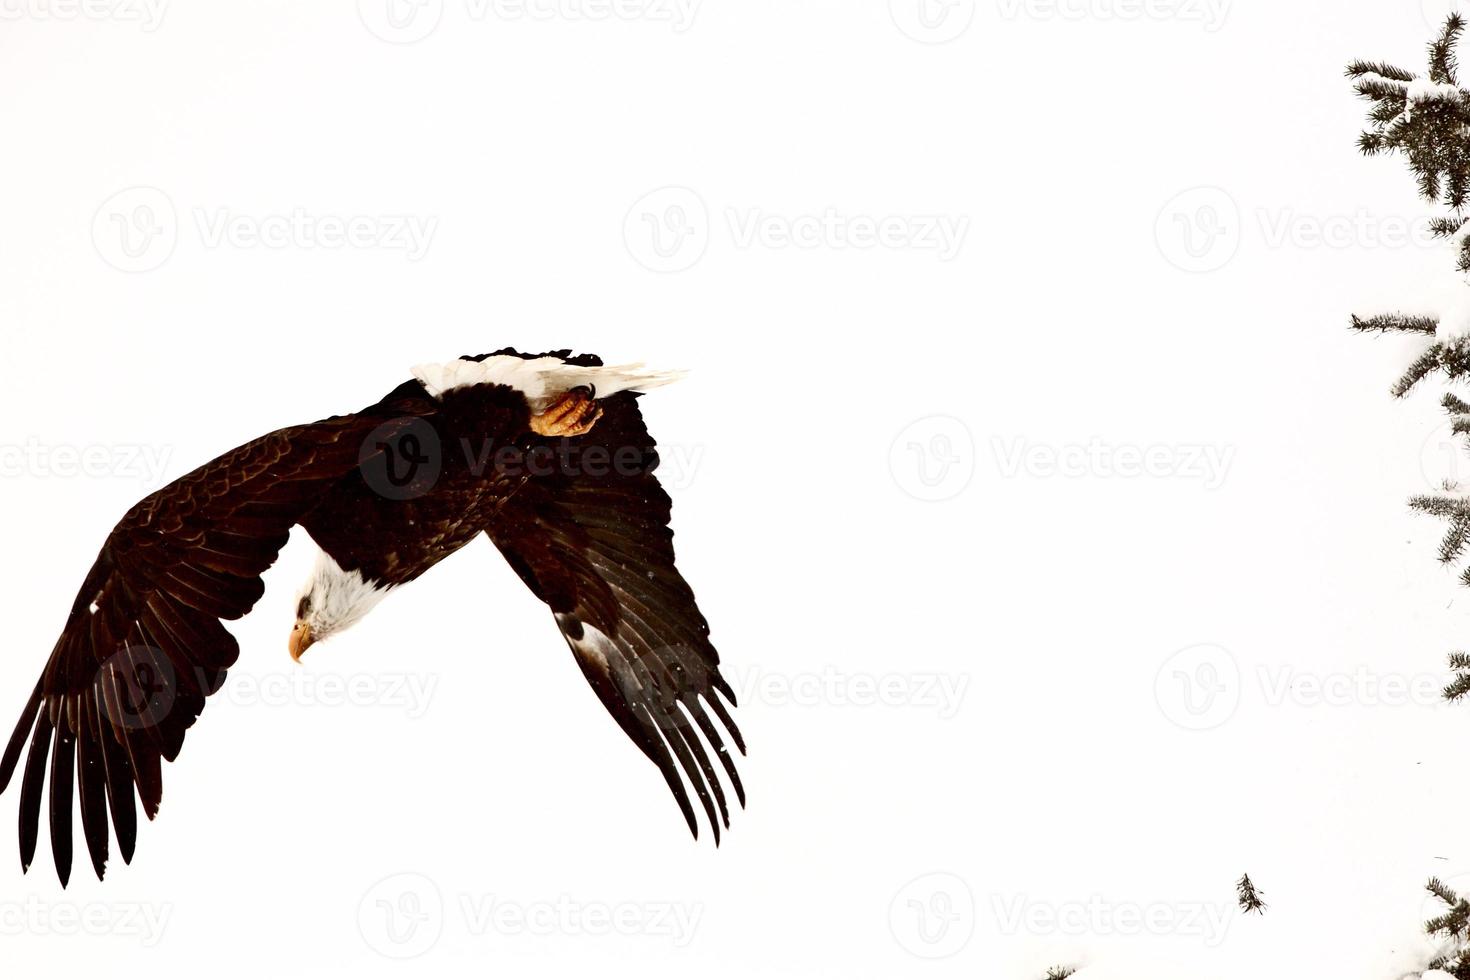 águila calva tomando vuelo de un árbol foto